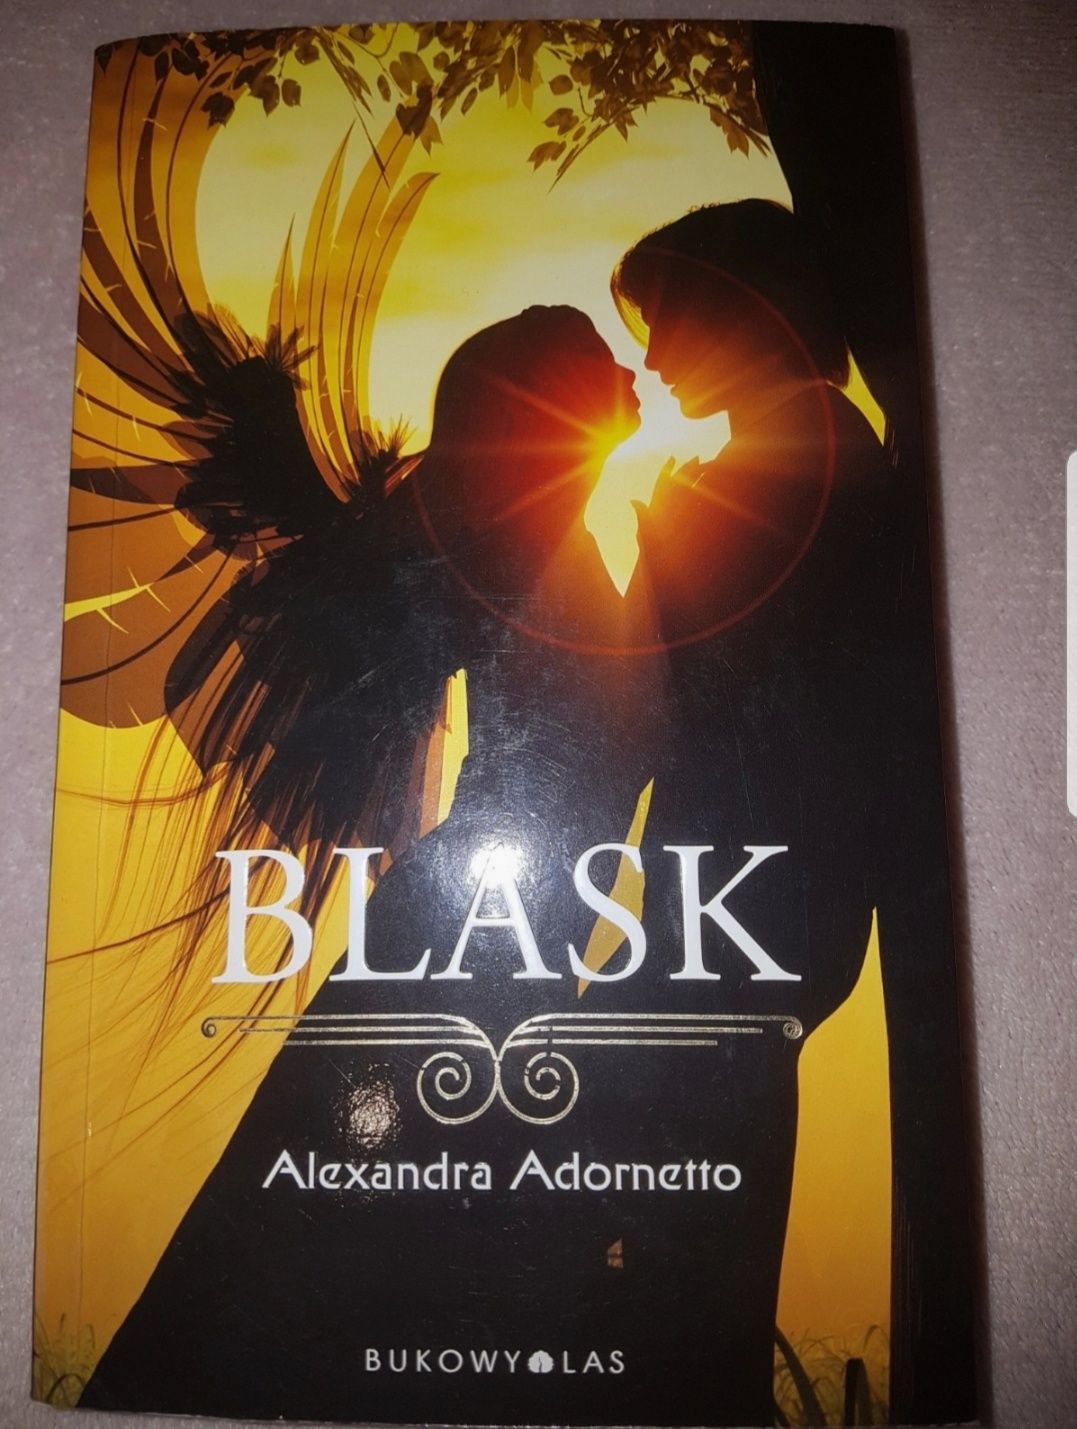 "Blask" Alexandra Adornetto